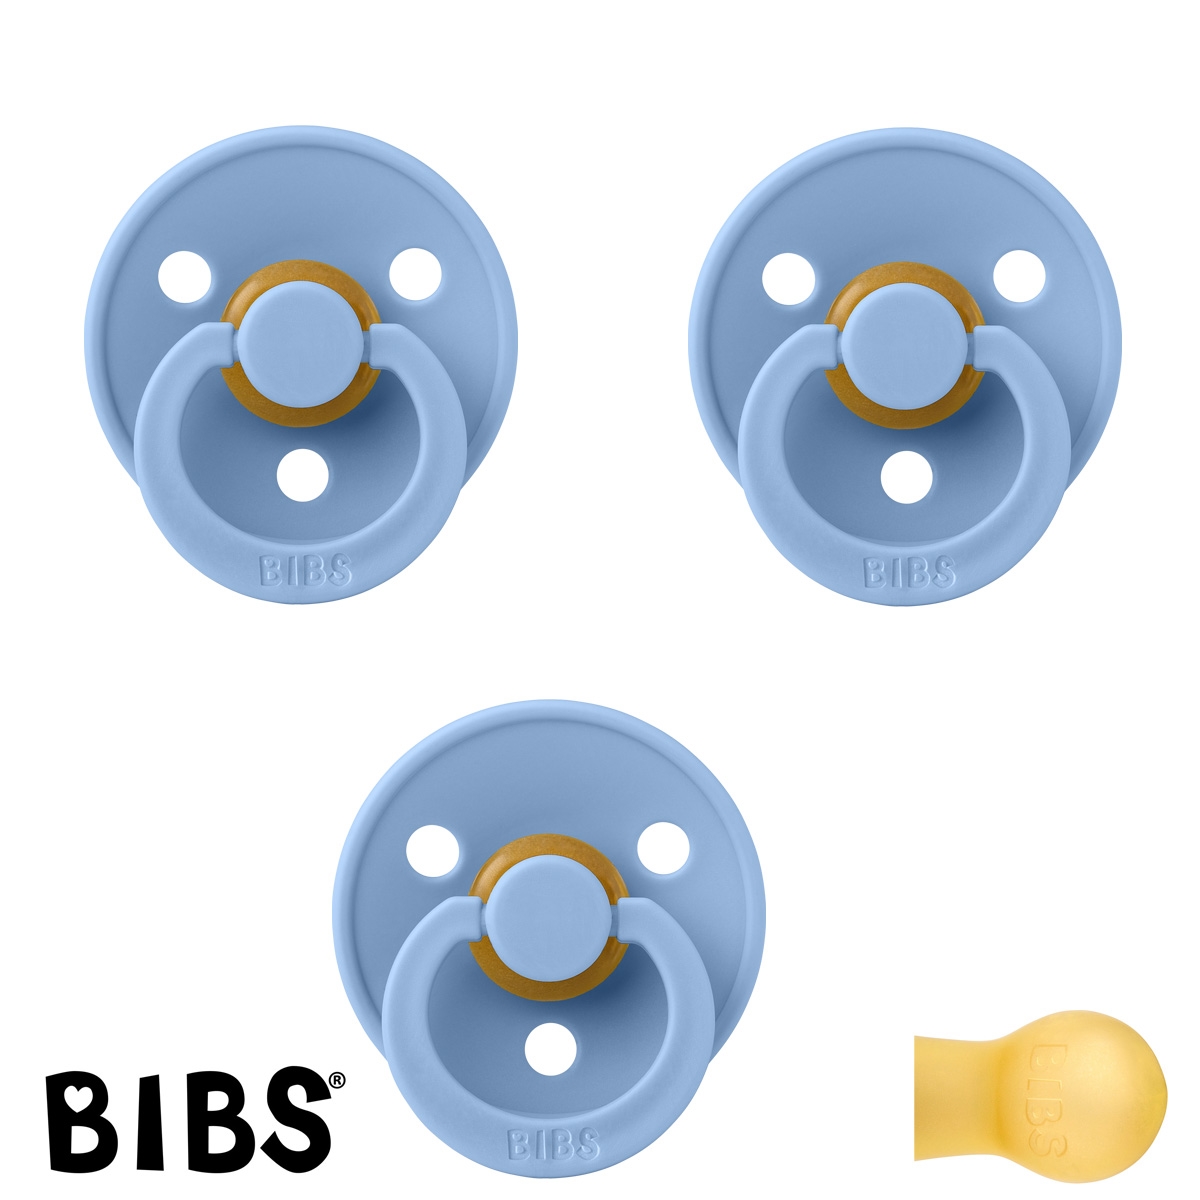 BIBS Colour Sutter med navn str2, 3 Sky Blue, Runde latex, Pakke med 3 sutter